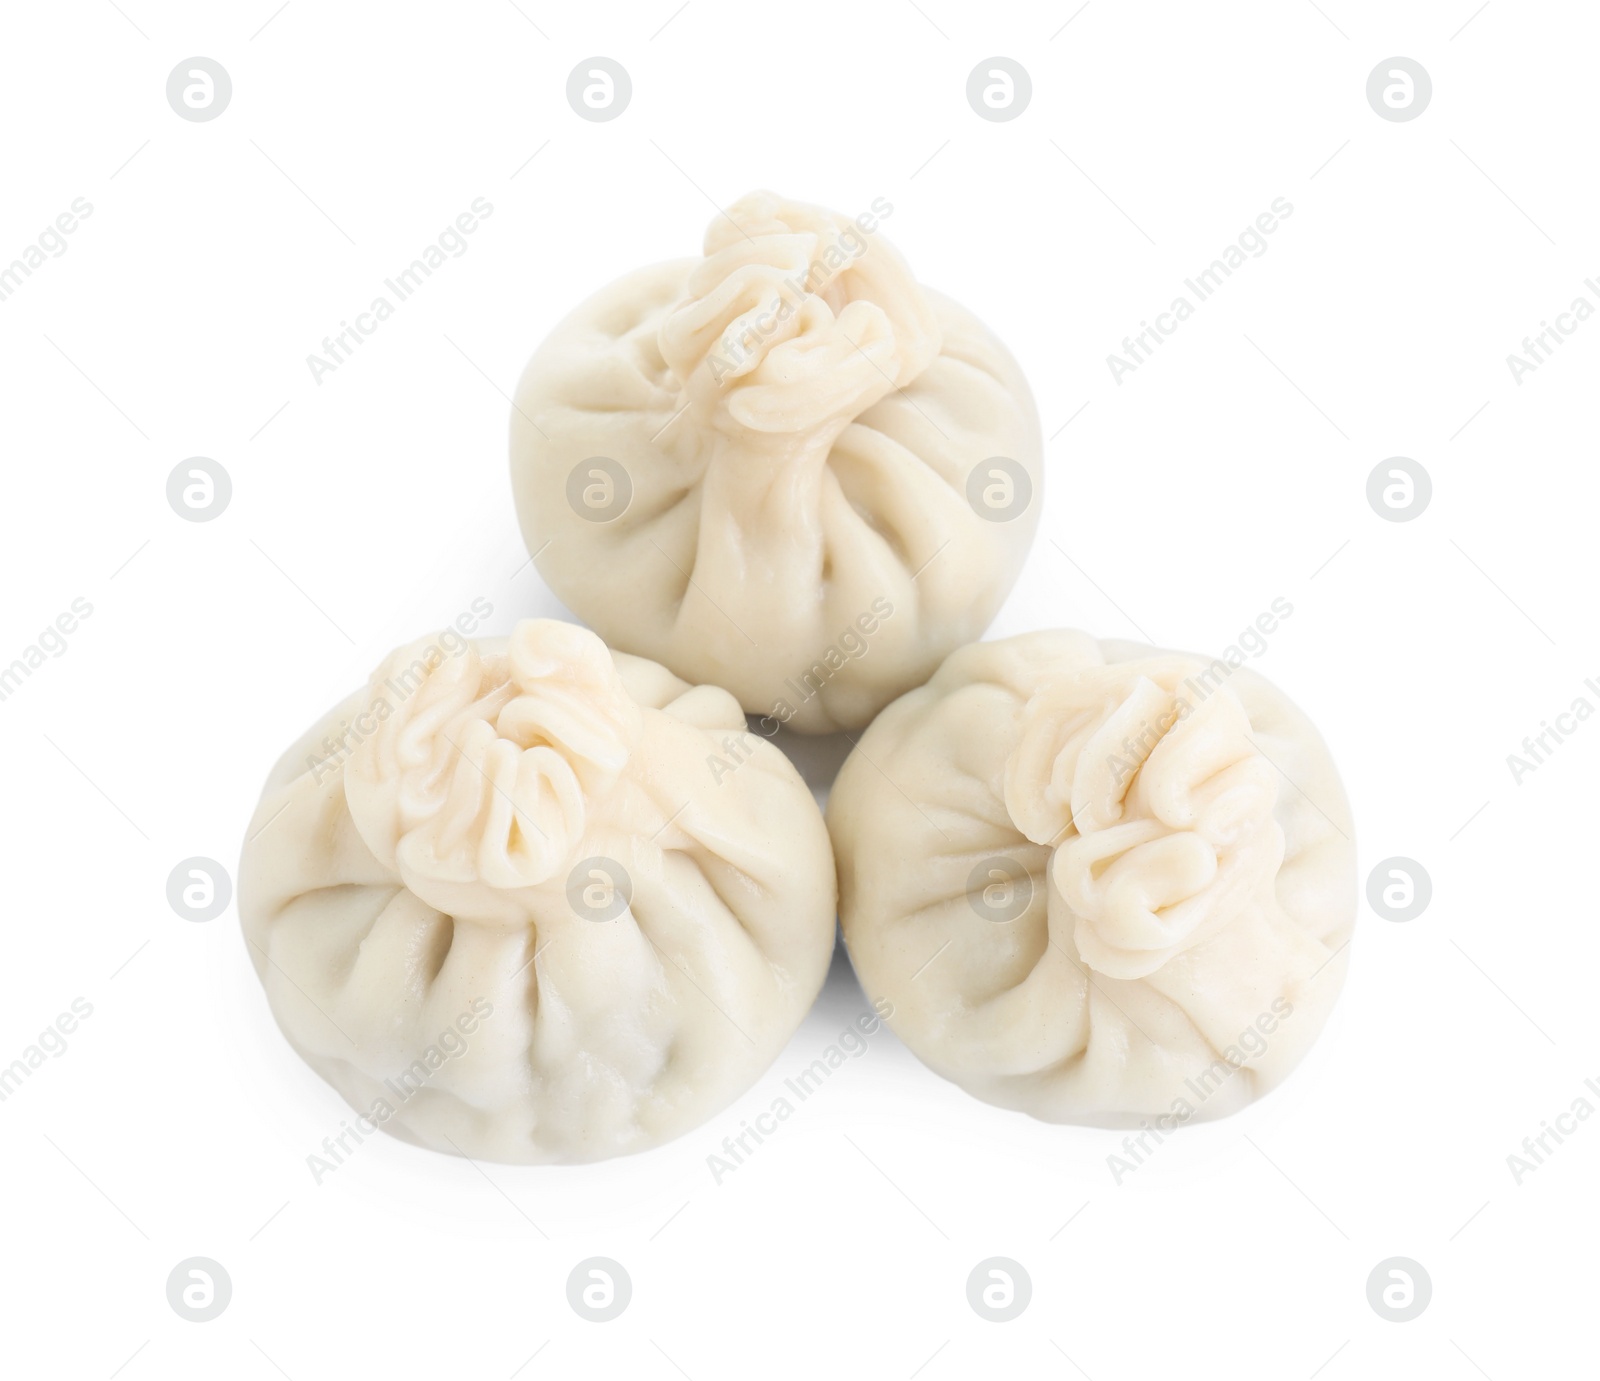 Photo of Three tasty khinkali (dumplings) isolated on white, top view. Georgian cuisine